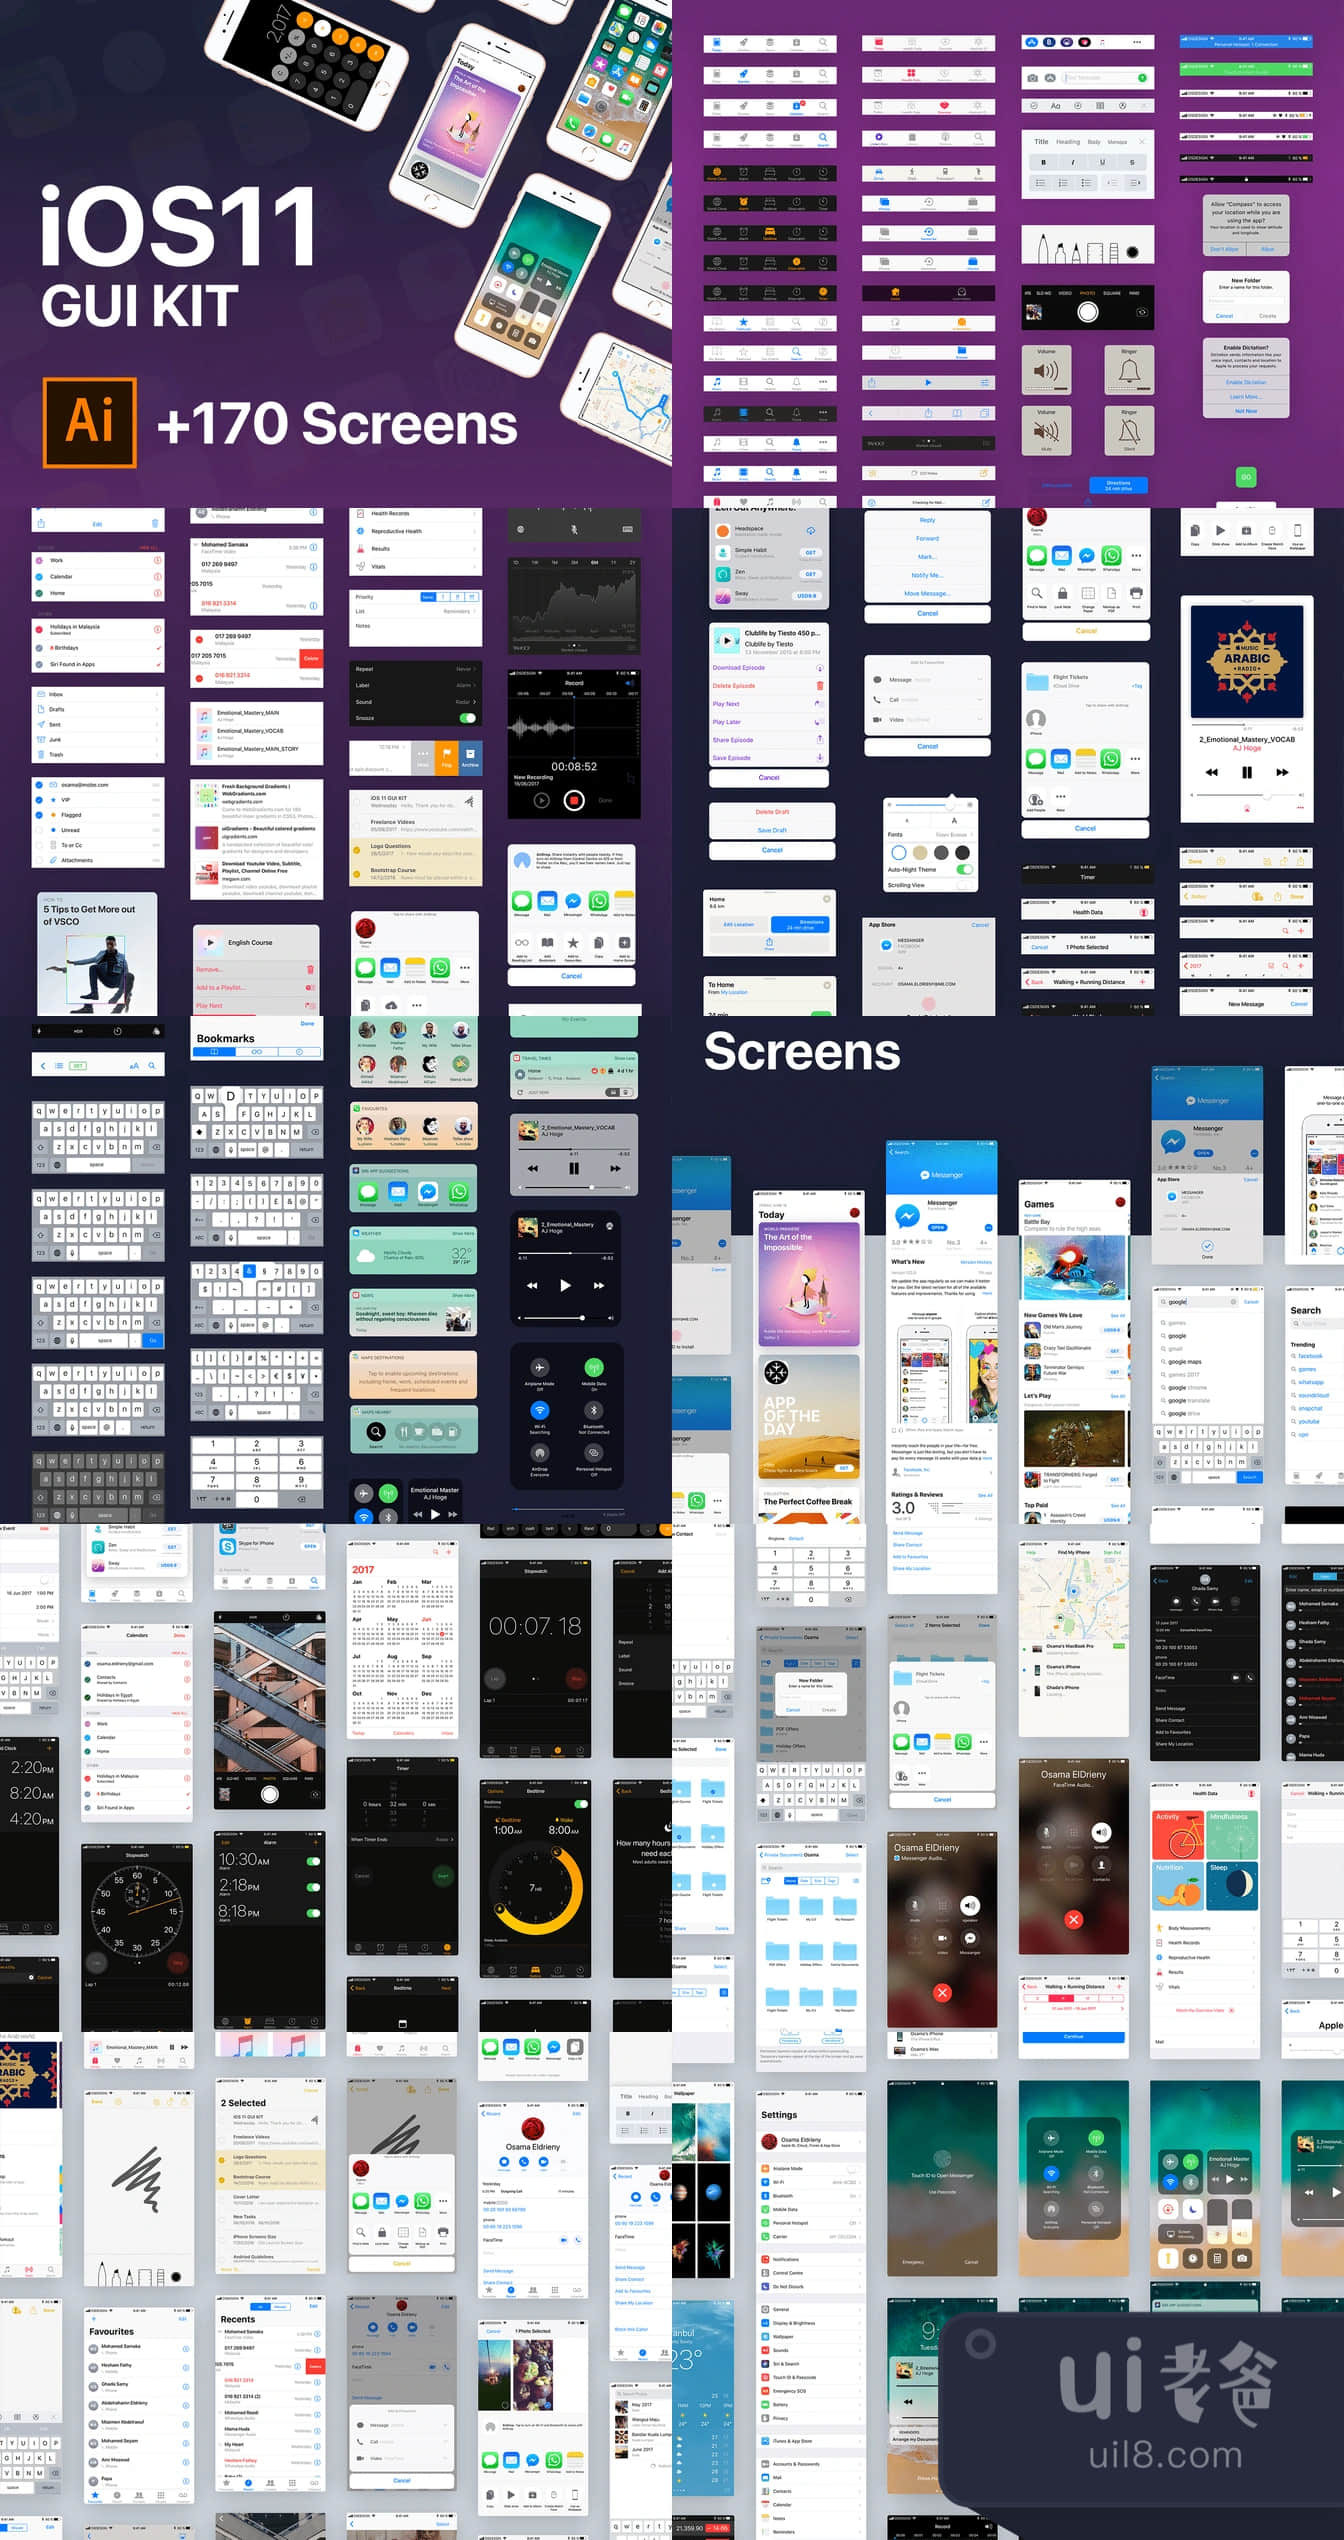 iOS11图形用户界面工具包 (iOS11 GUI Kit)插图1